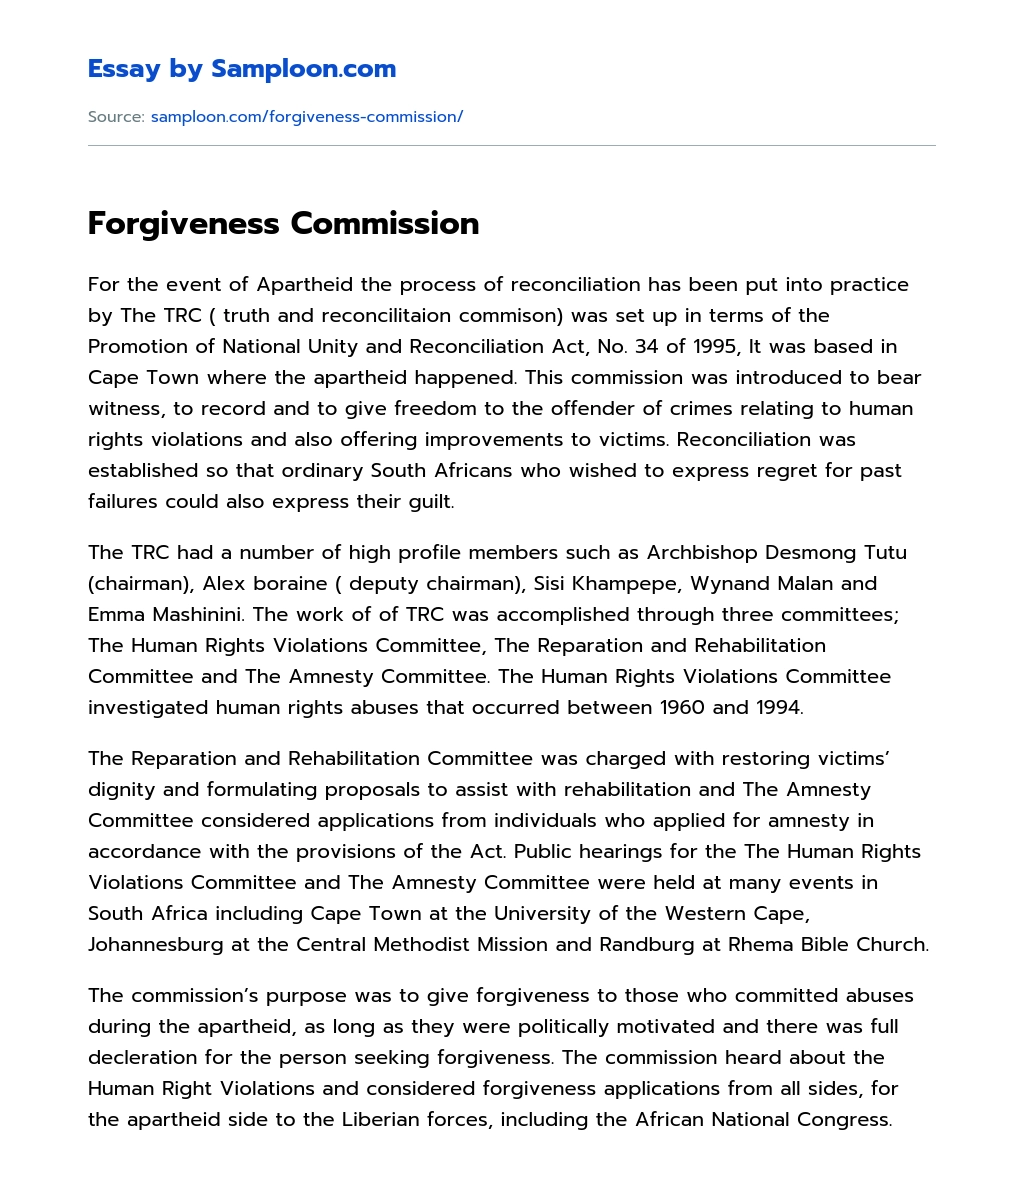 Forgiveness Commission essay